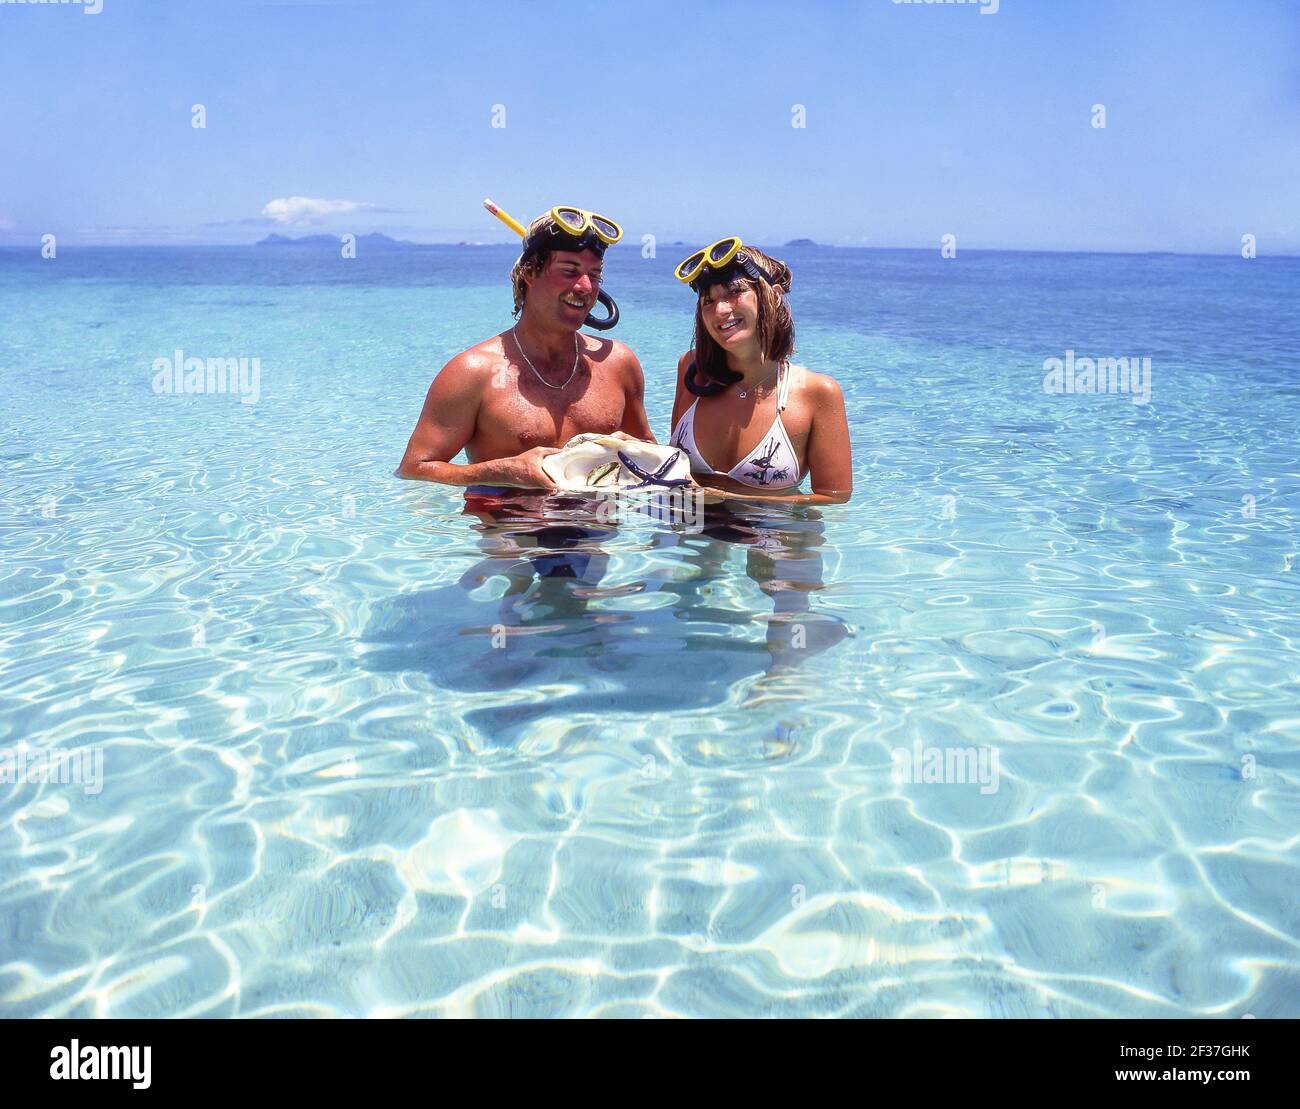 Paar mit Schnorchelausrüstung im Meer, Beachcomber Island Resort Beachcomber Island, Mamanuca Inseln, Republik Fidschi-Inseln Stockfoto